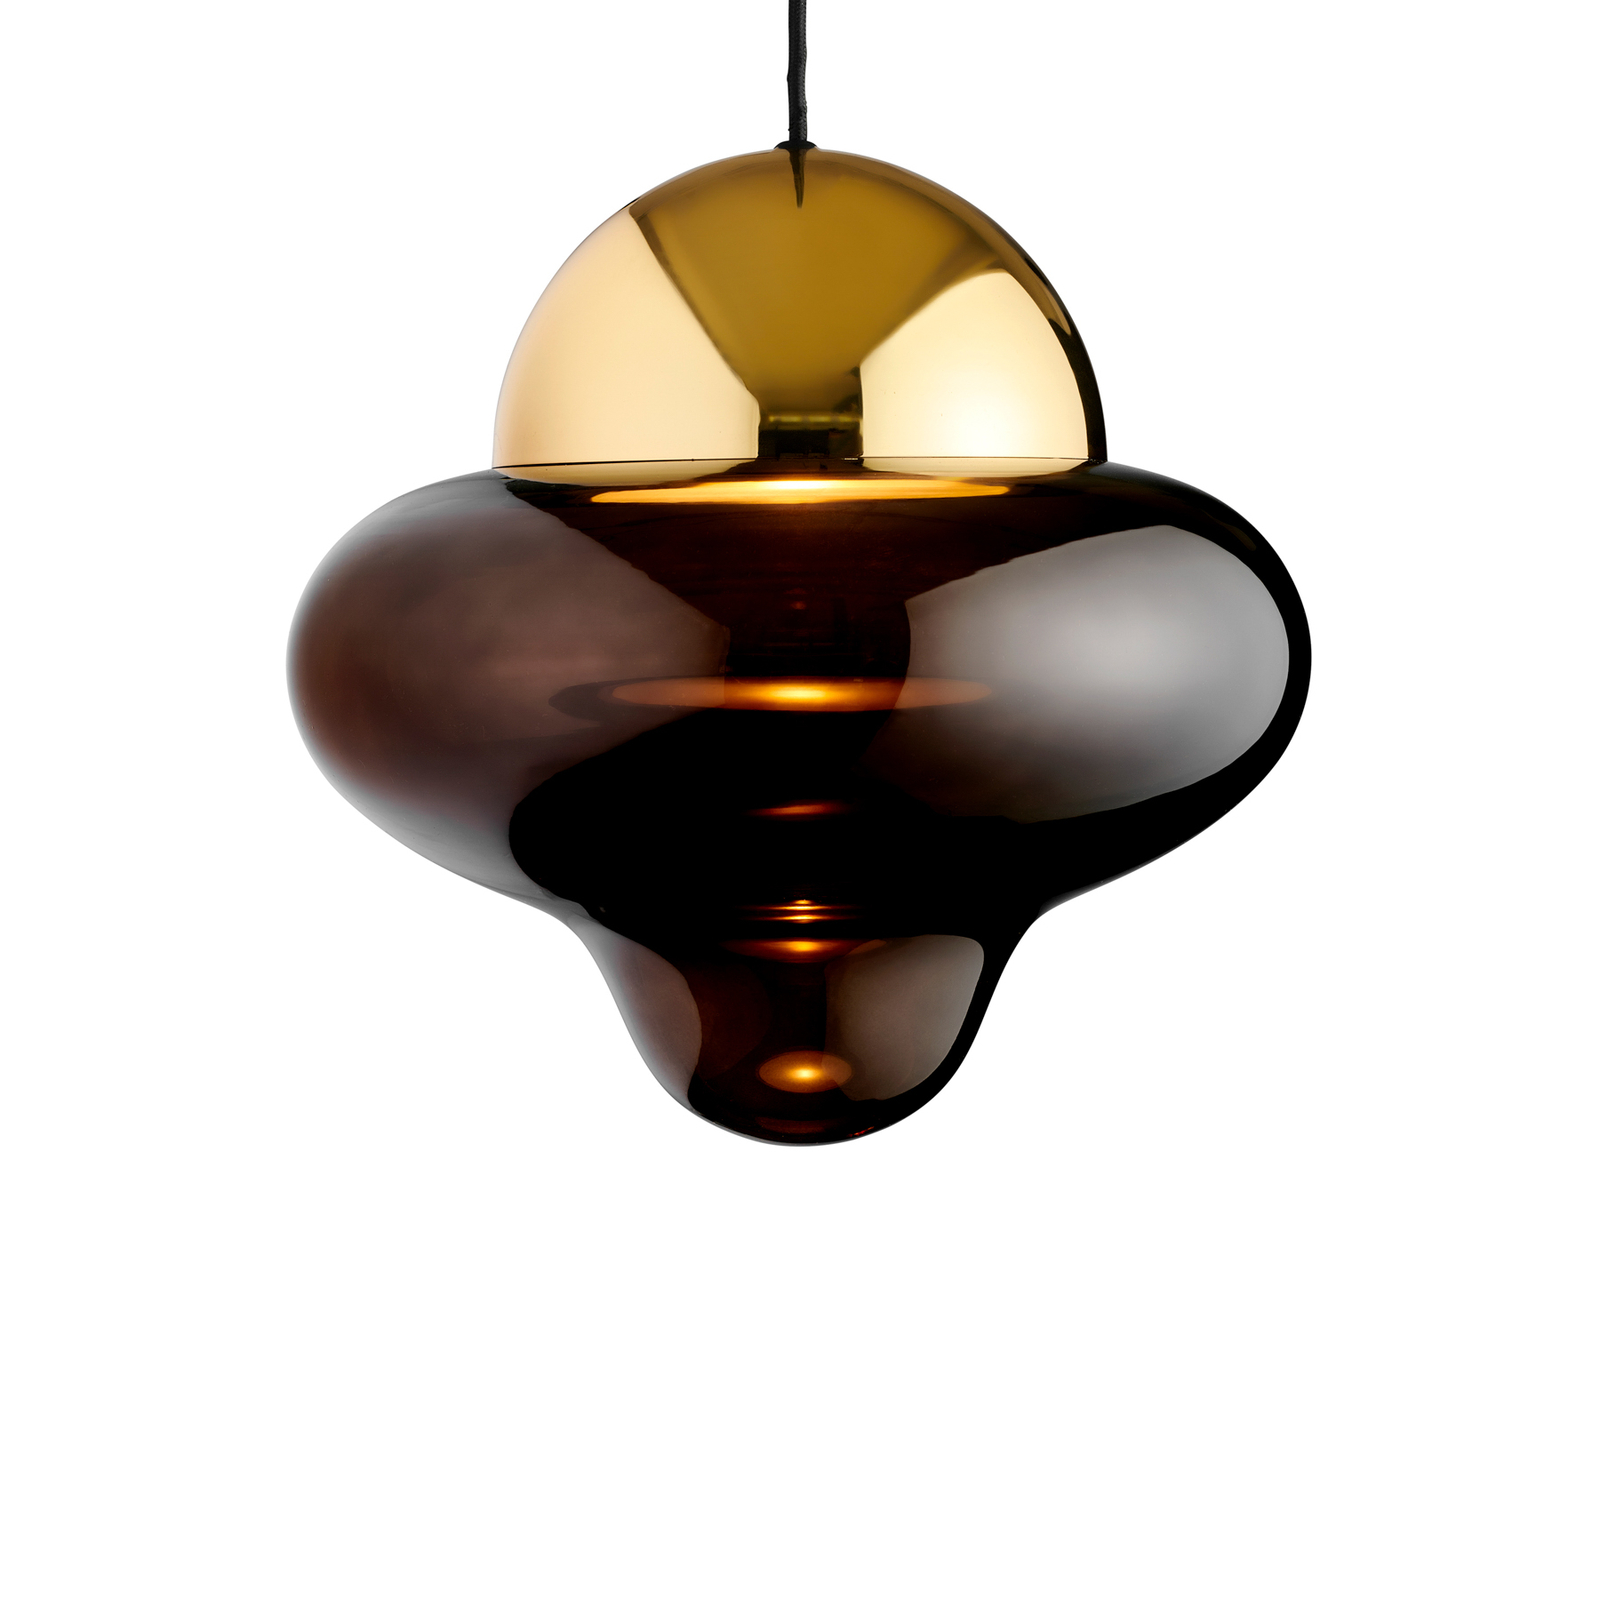 LED pendant light Nutty XL, brown / gold-coloured, Ø 30 cm, glass